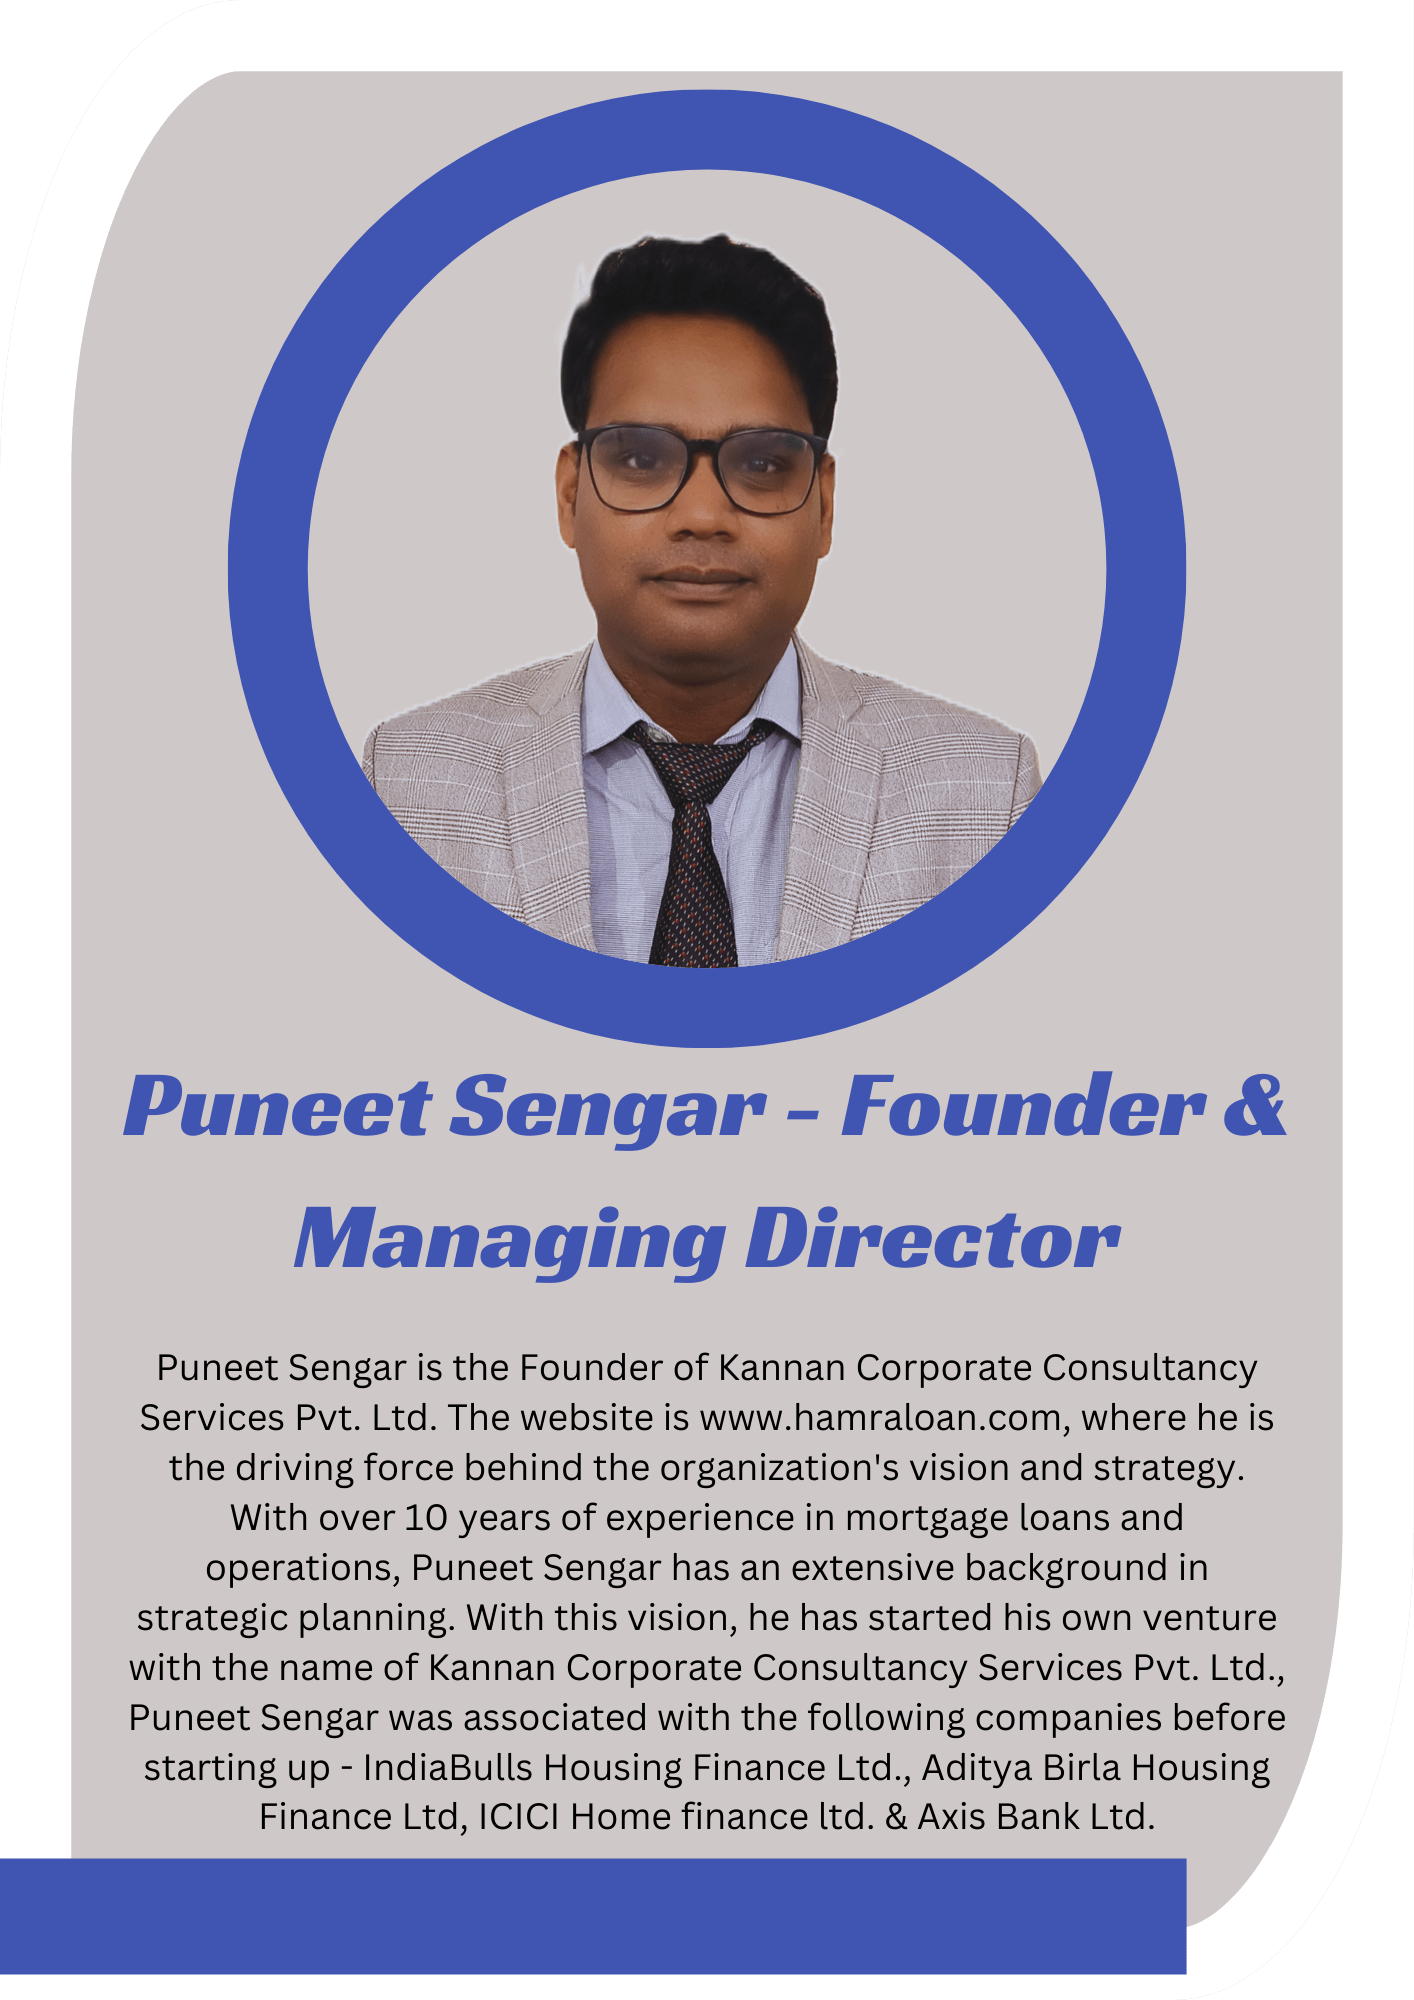 Puneet Sengar- Founder of Hamra loan about us